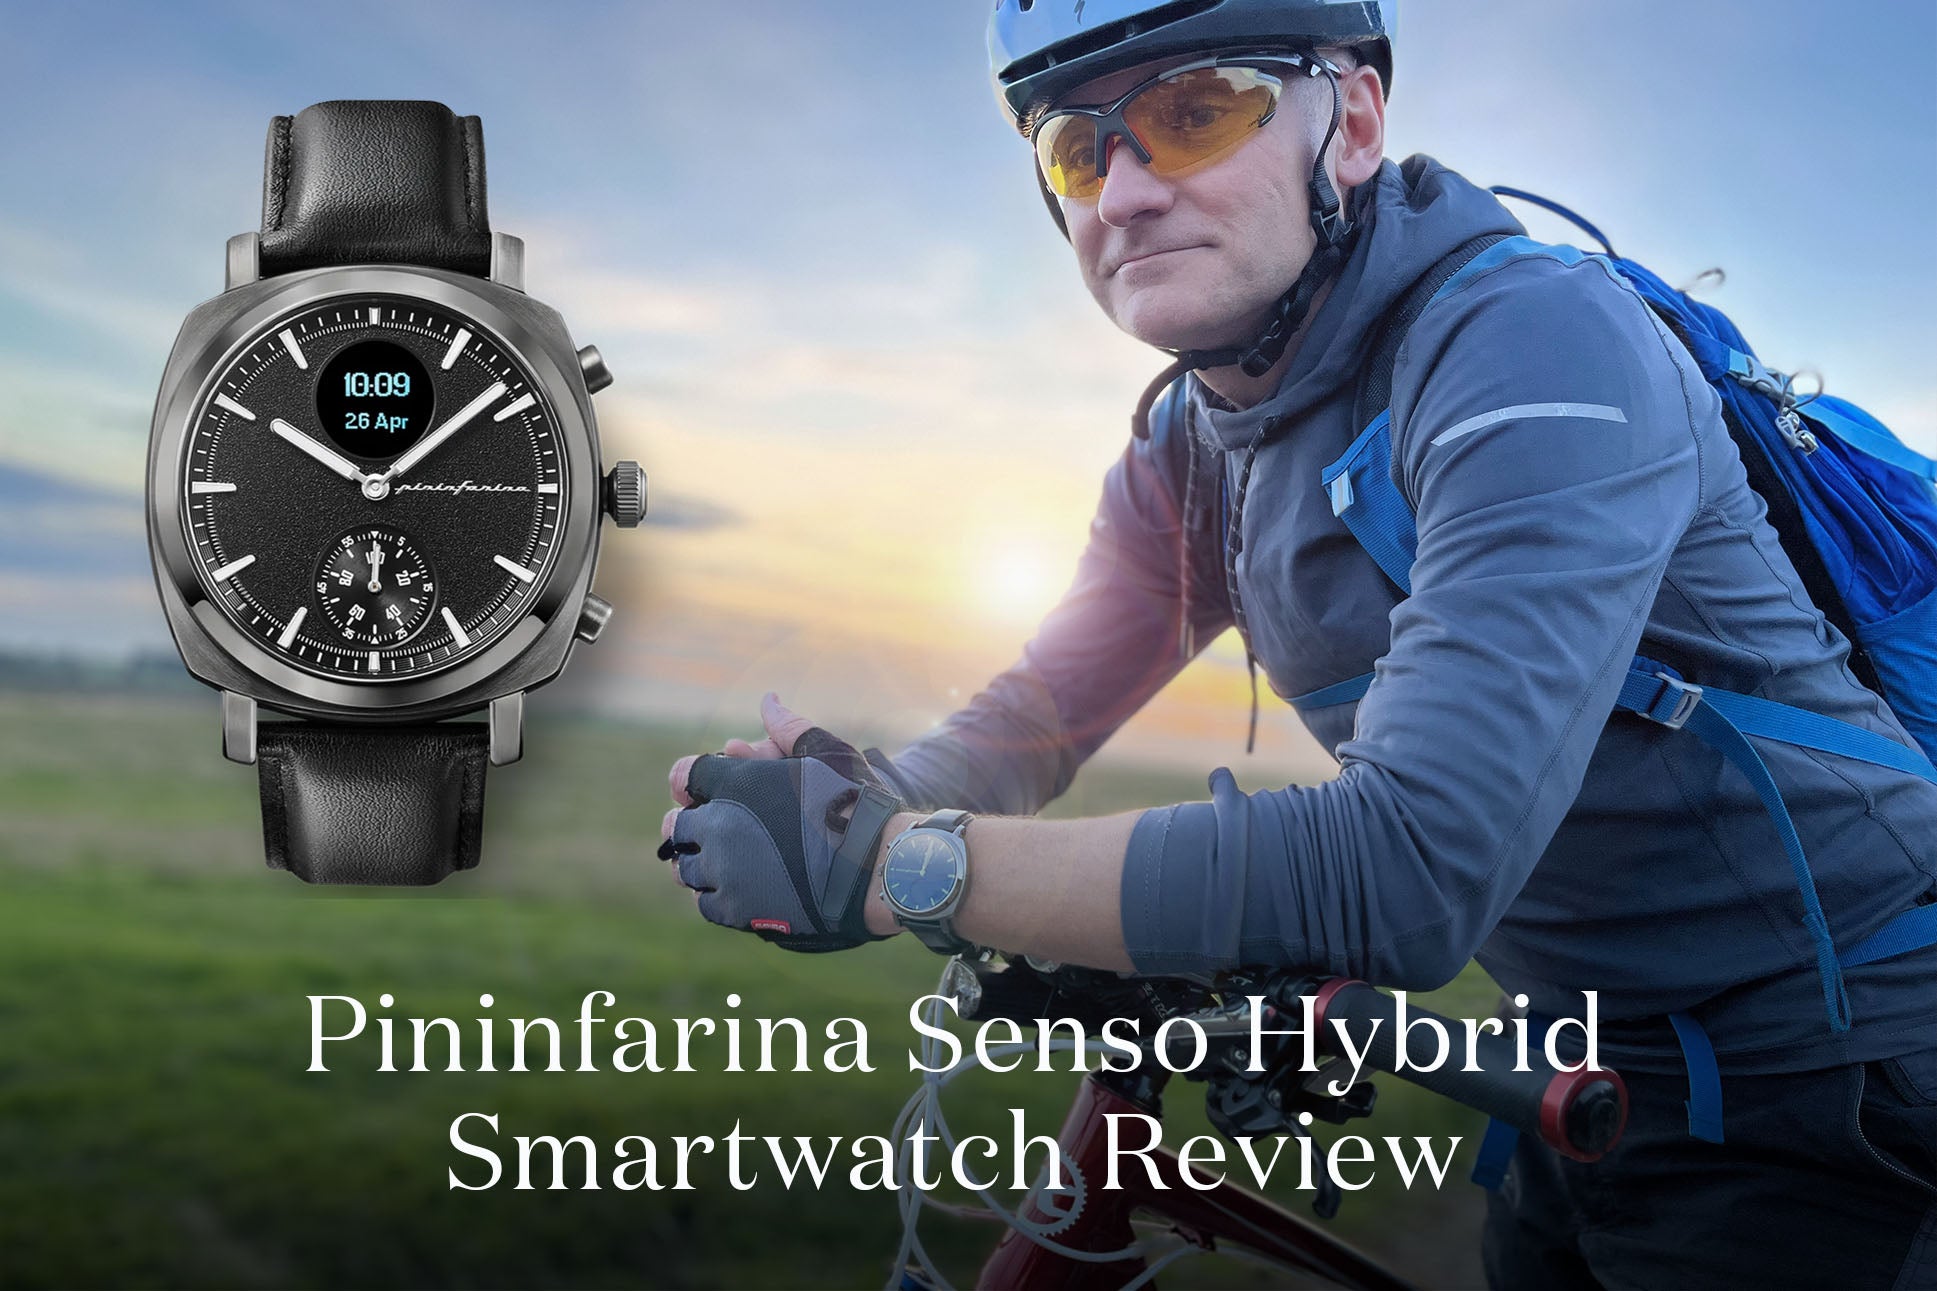 Pininfarina Senso Hybrid Smartwatch Review: A Smartwatch That Does It All